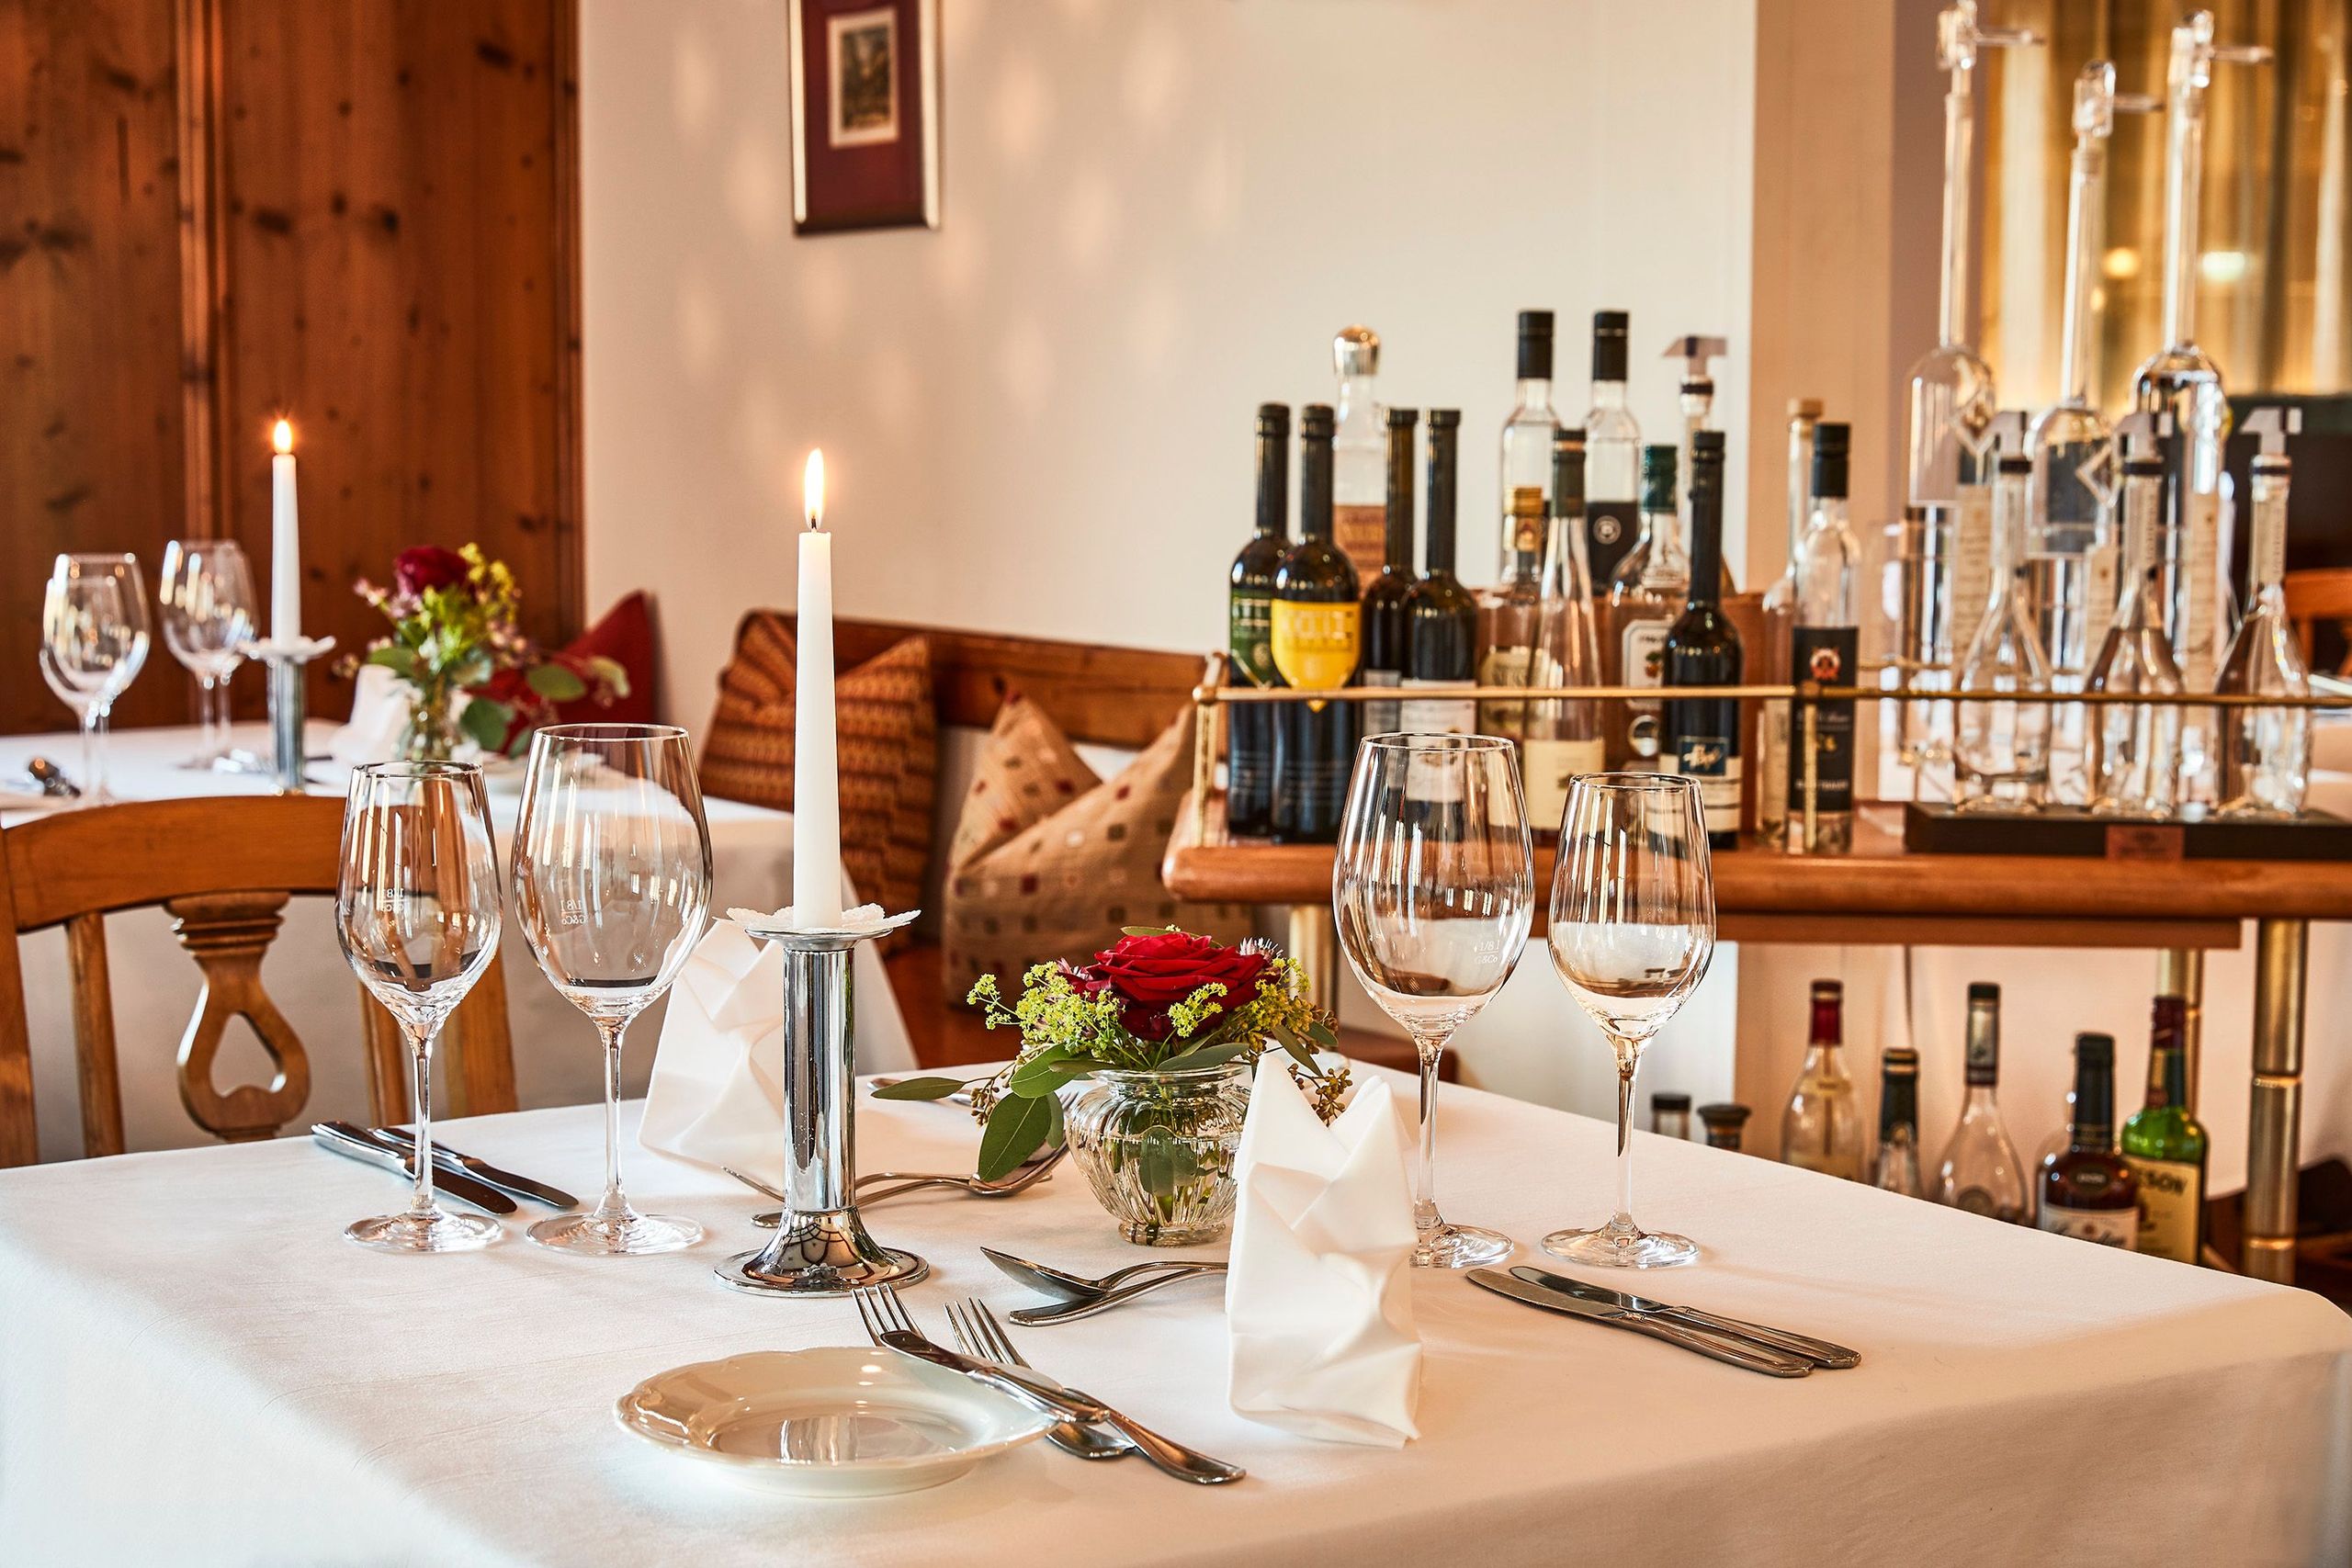 Hotel Steigenberger & SPA - Krems - Taberna de vinos Smaragd